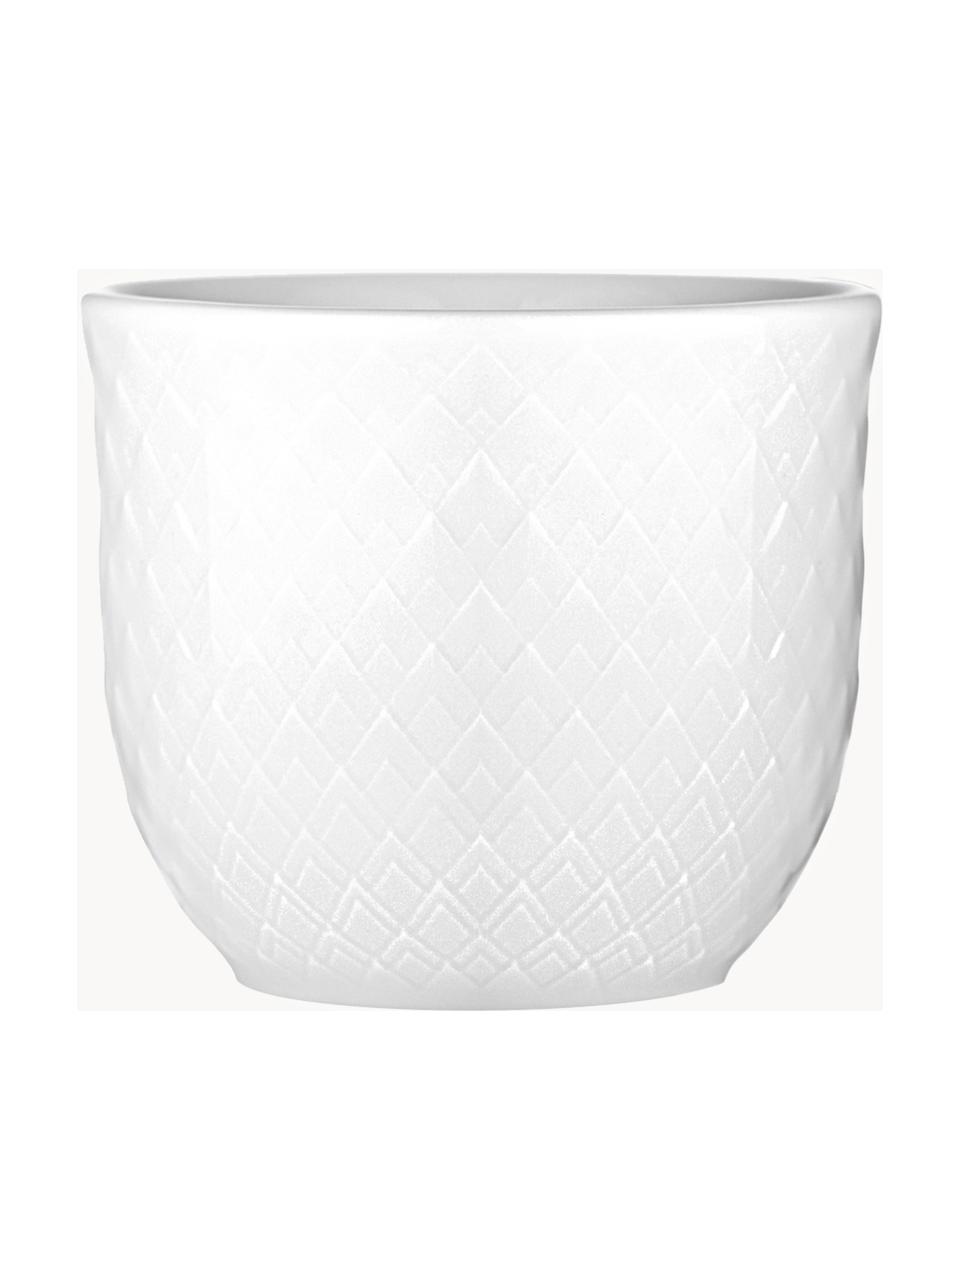 Porzellan-Eierbecher Rhombe mit strukturierter Oberfläche, 2 Stück, Porzellan, Weiß, Ø 5 x H 5 cm